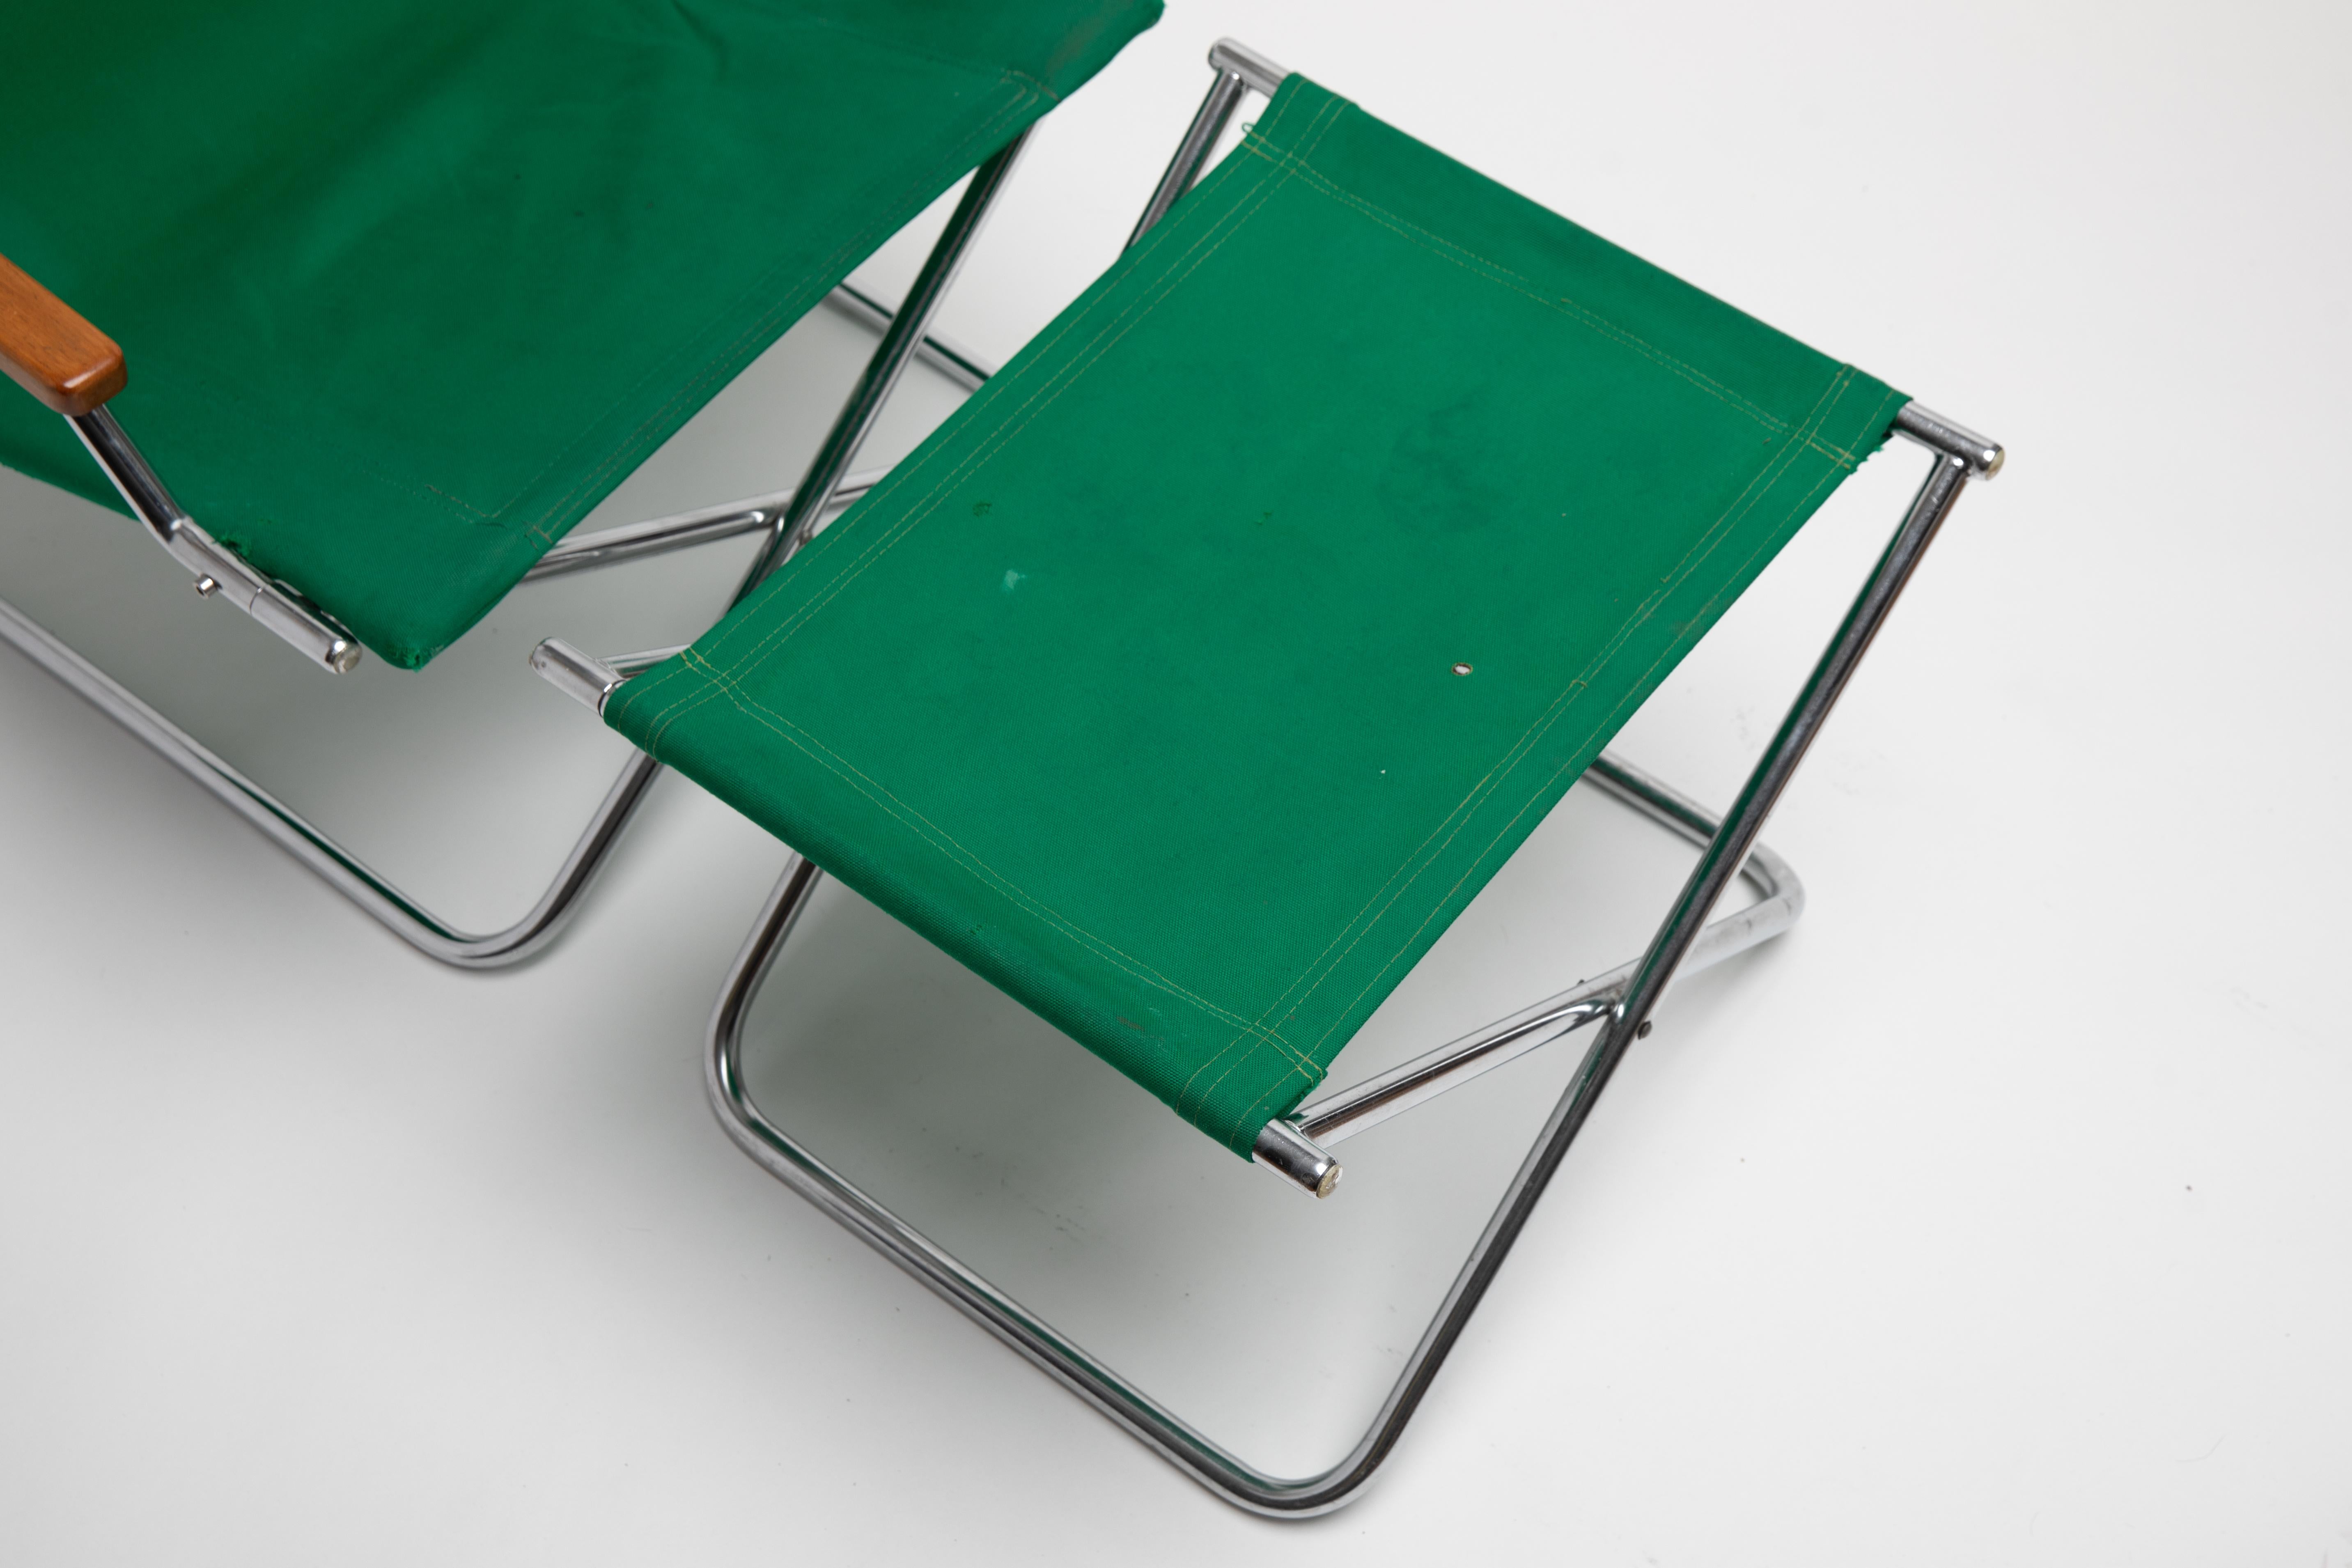 japanese folding chair